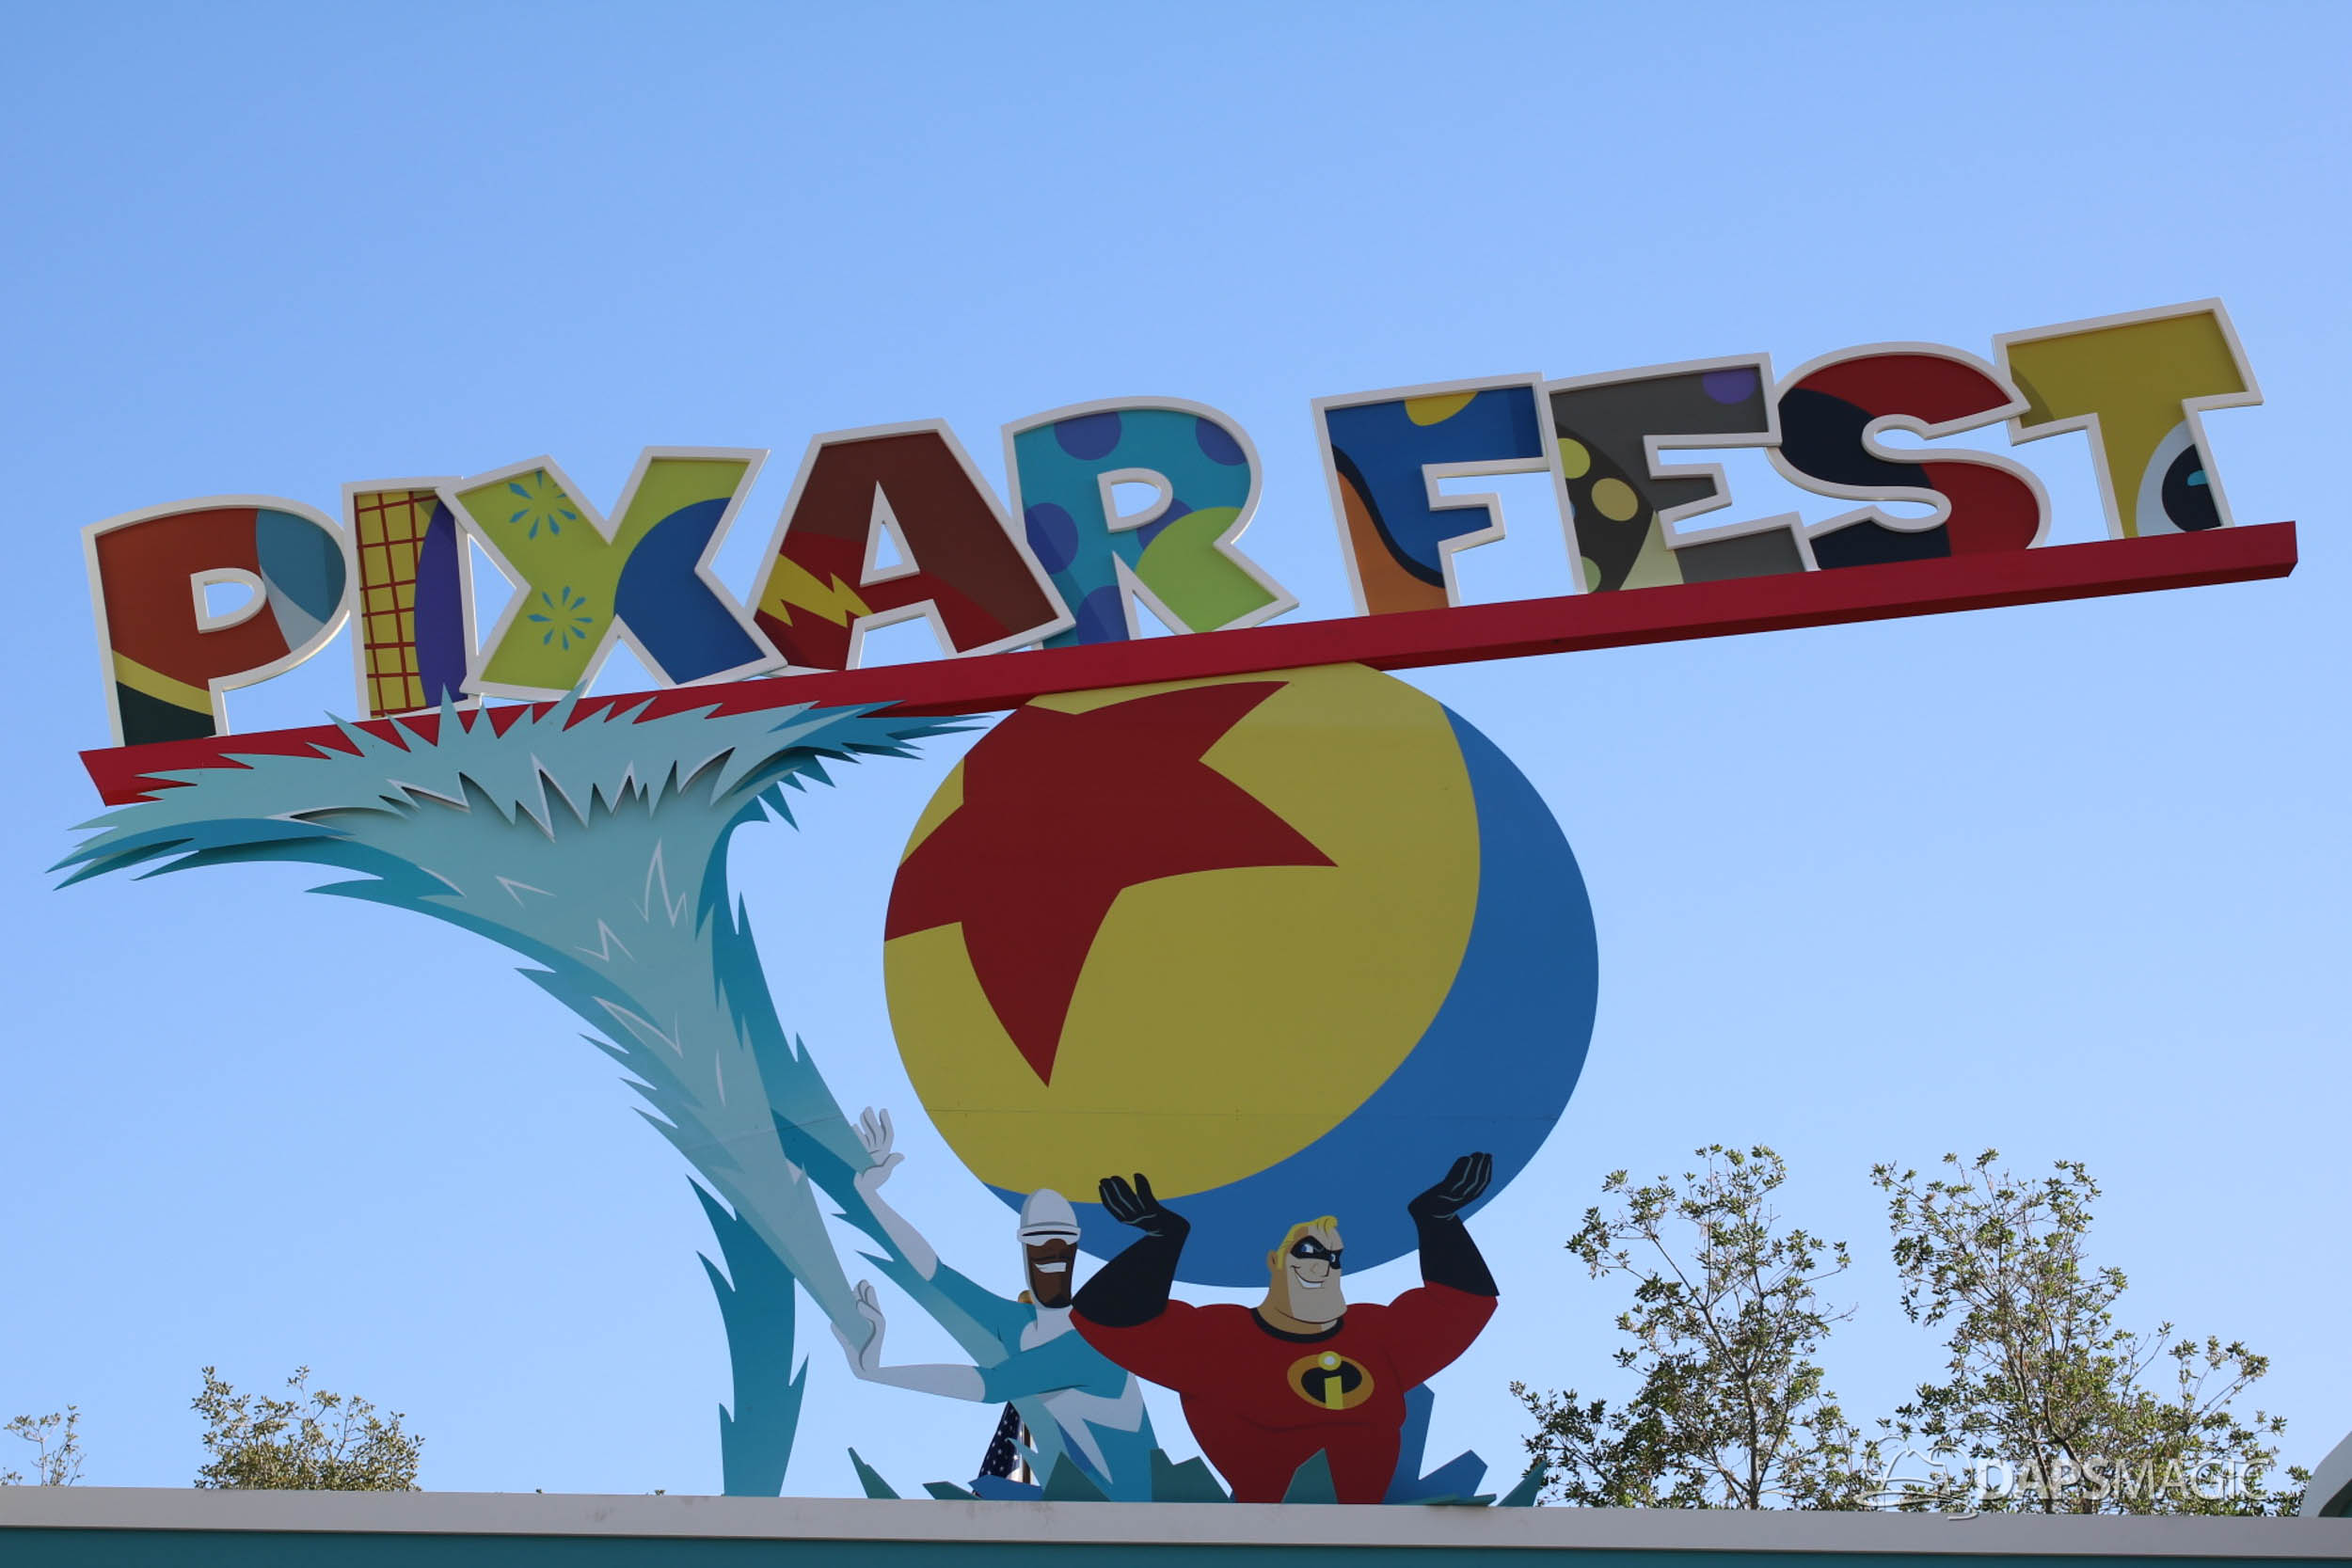 5 Favorite Pixar Fest Offerings From This Summer’s Celebration at the Disneyland Resort